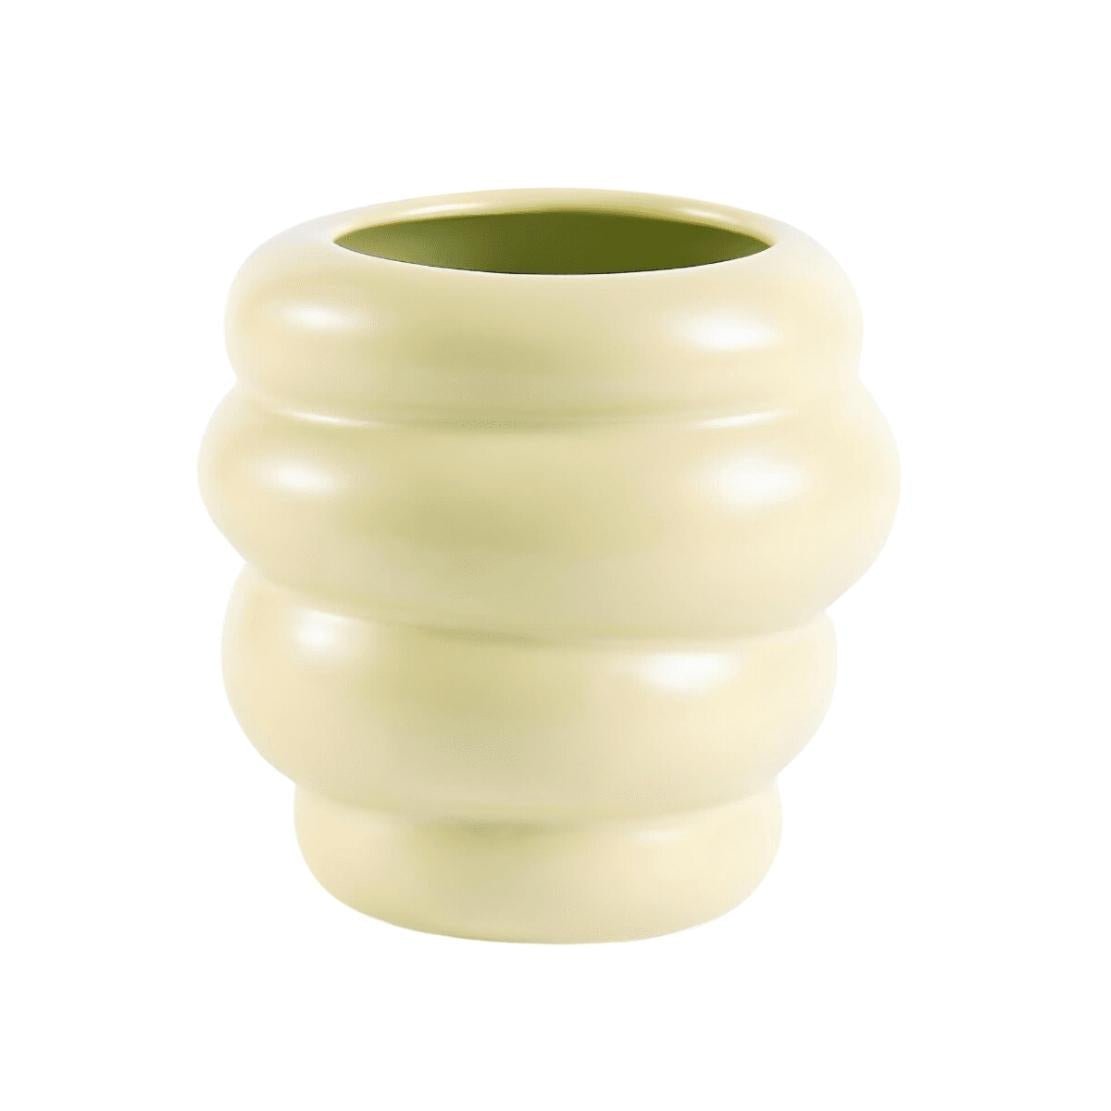 Low, green ceramic honeycomb vase